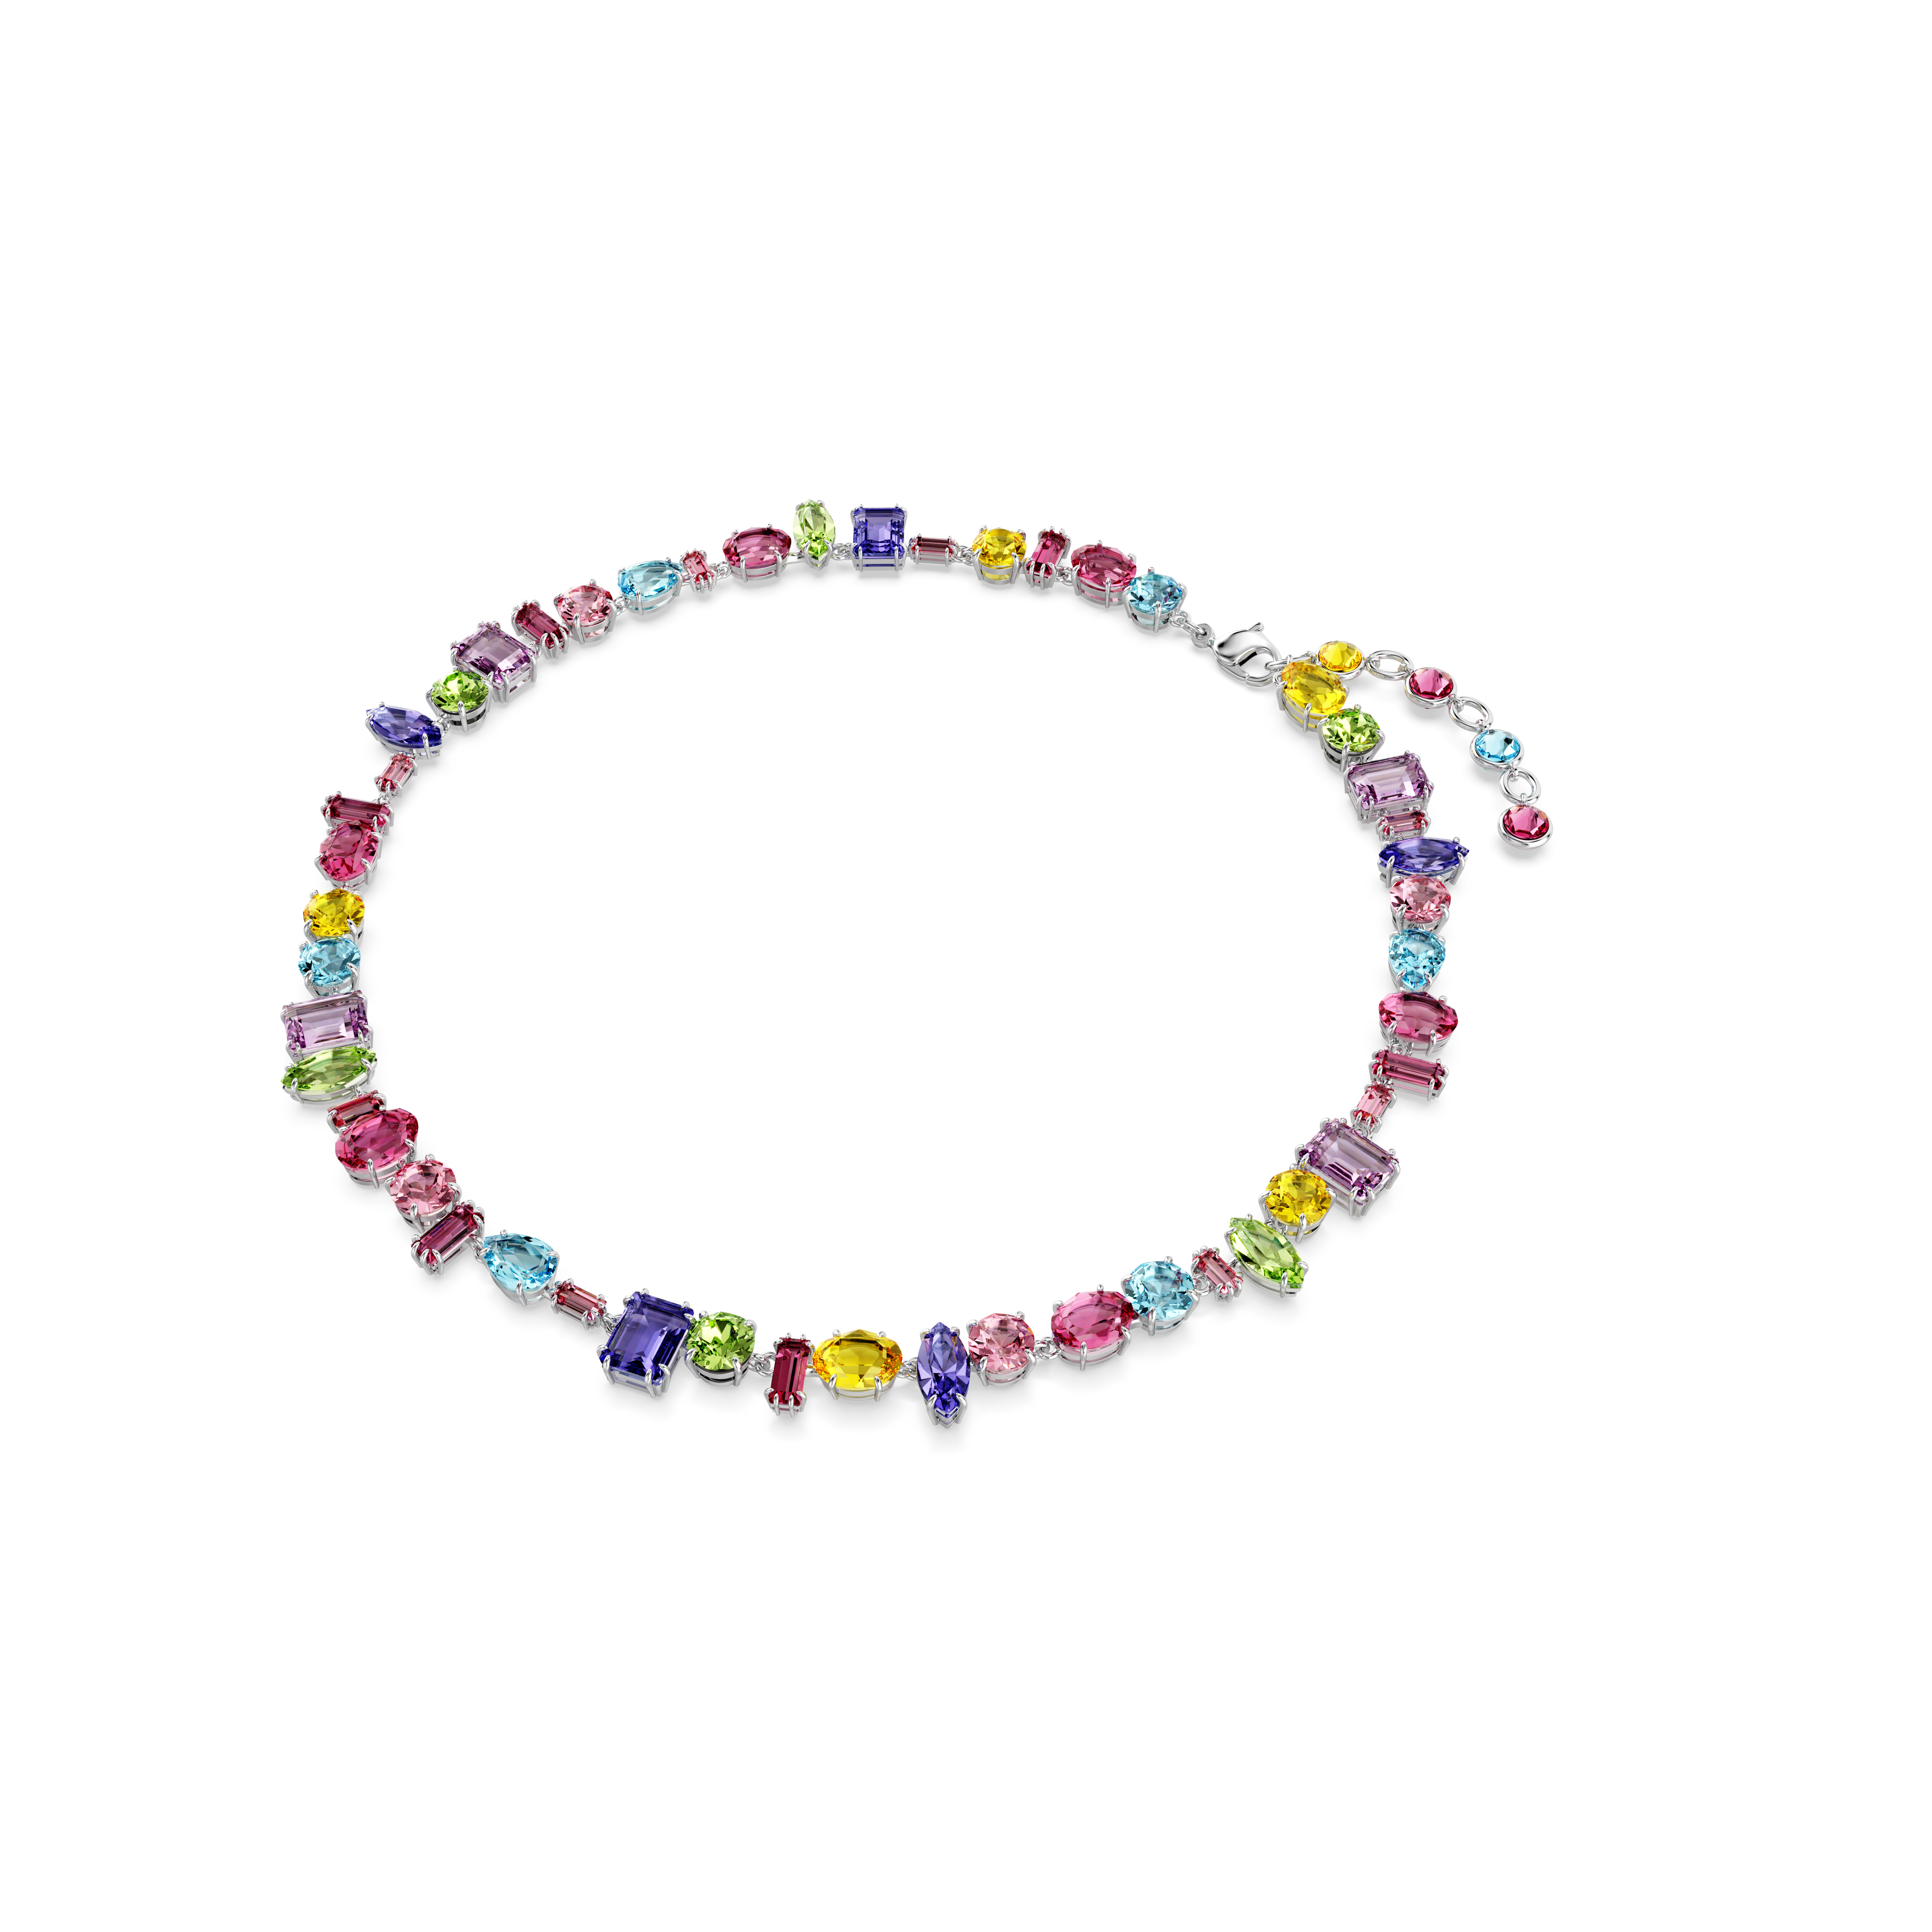 Gema necklace, Mixed cuts, Multicolored, Rhodium plated by SWAROVSKI